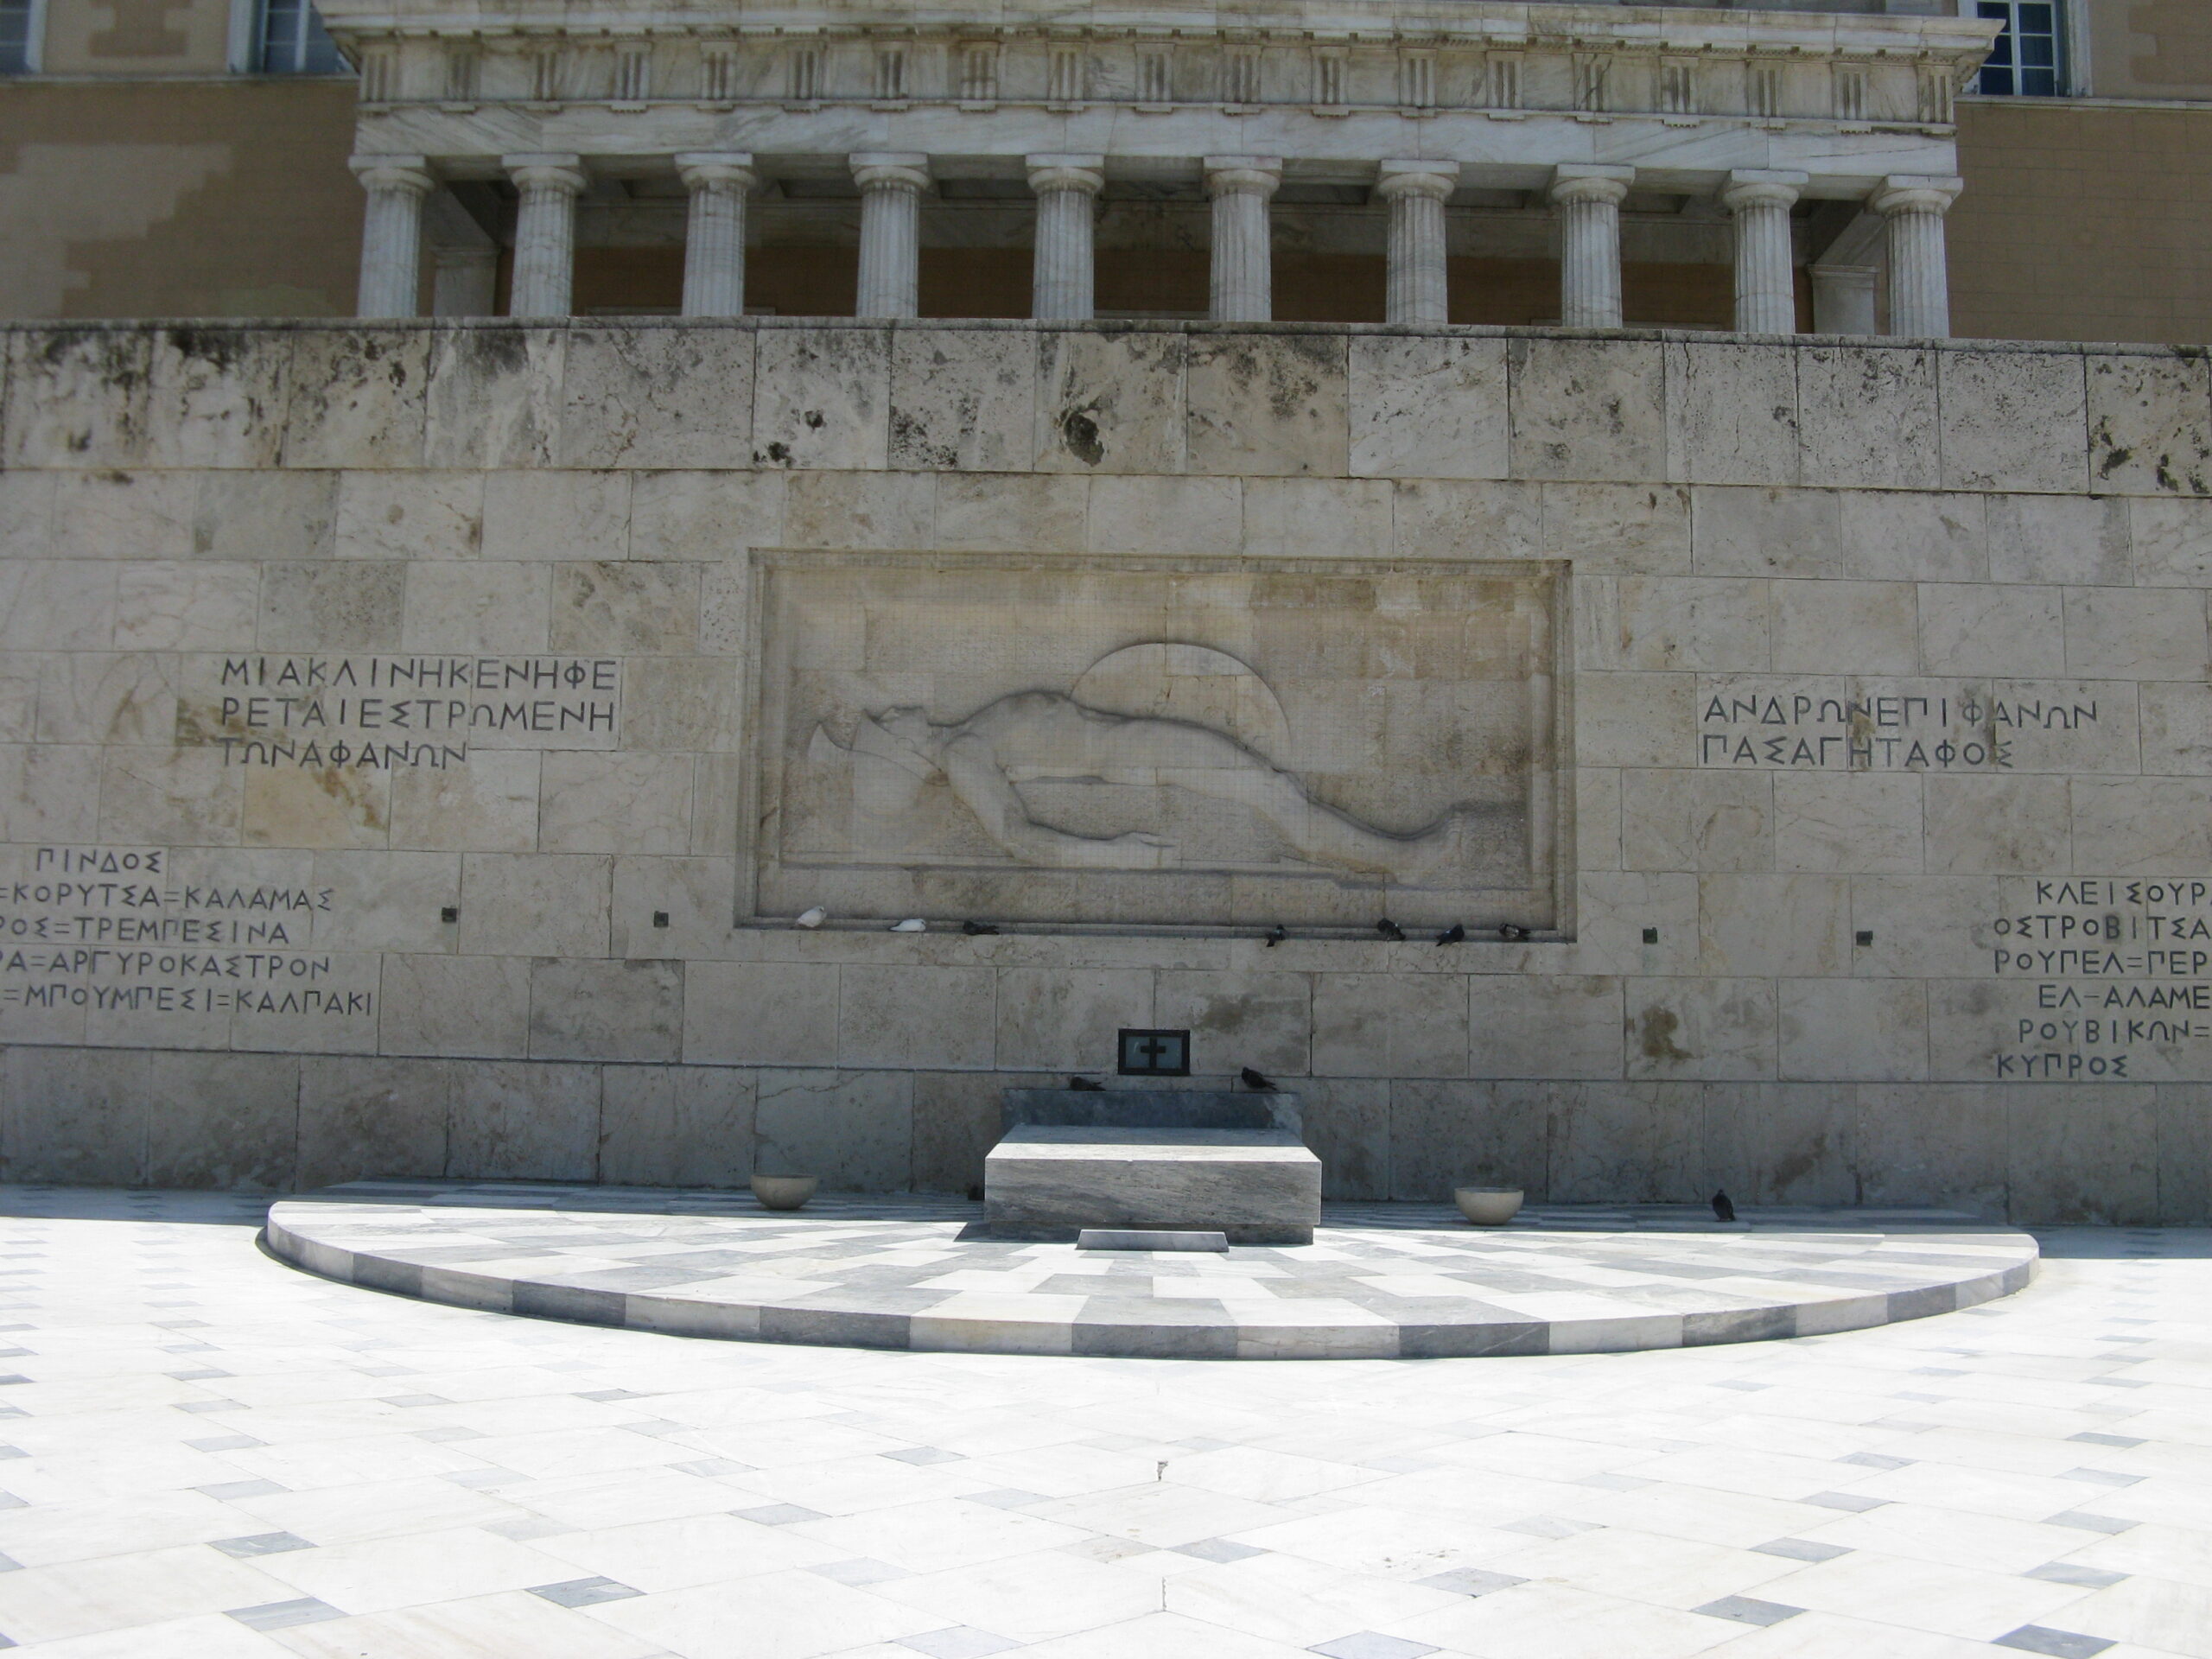 National mausoleum of Greece